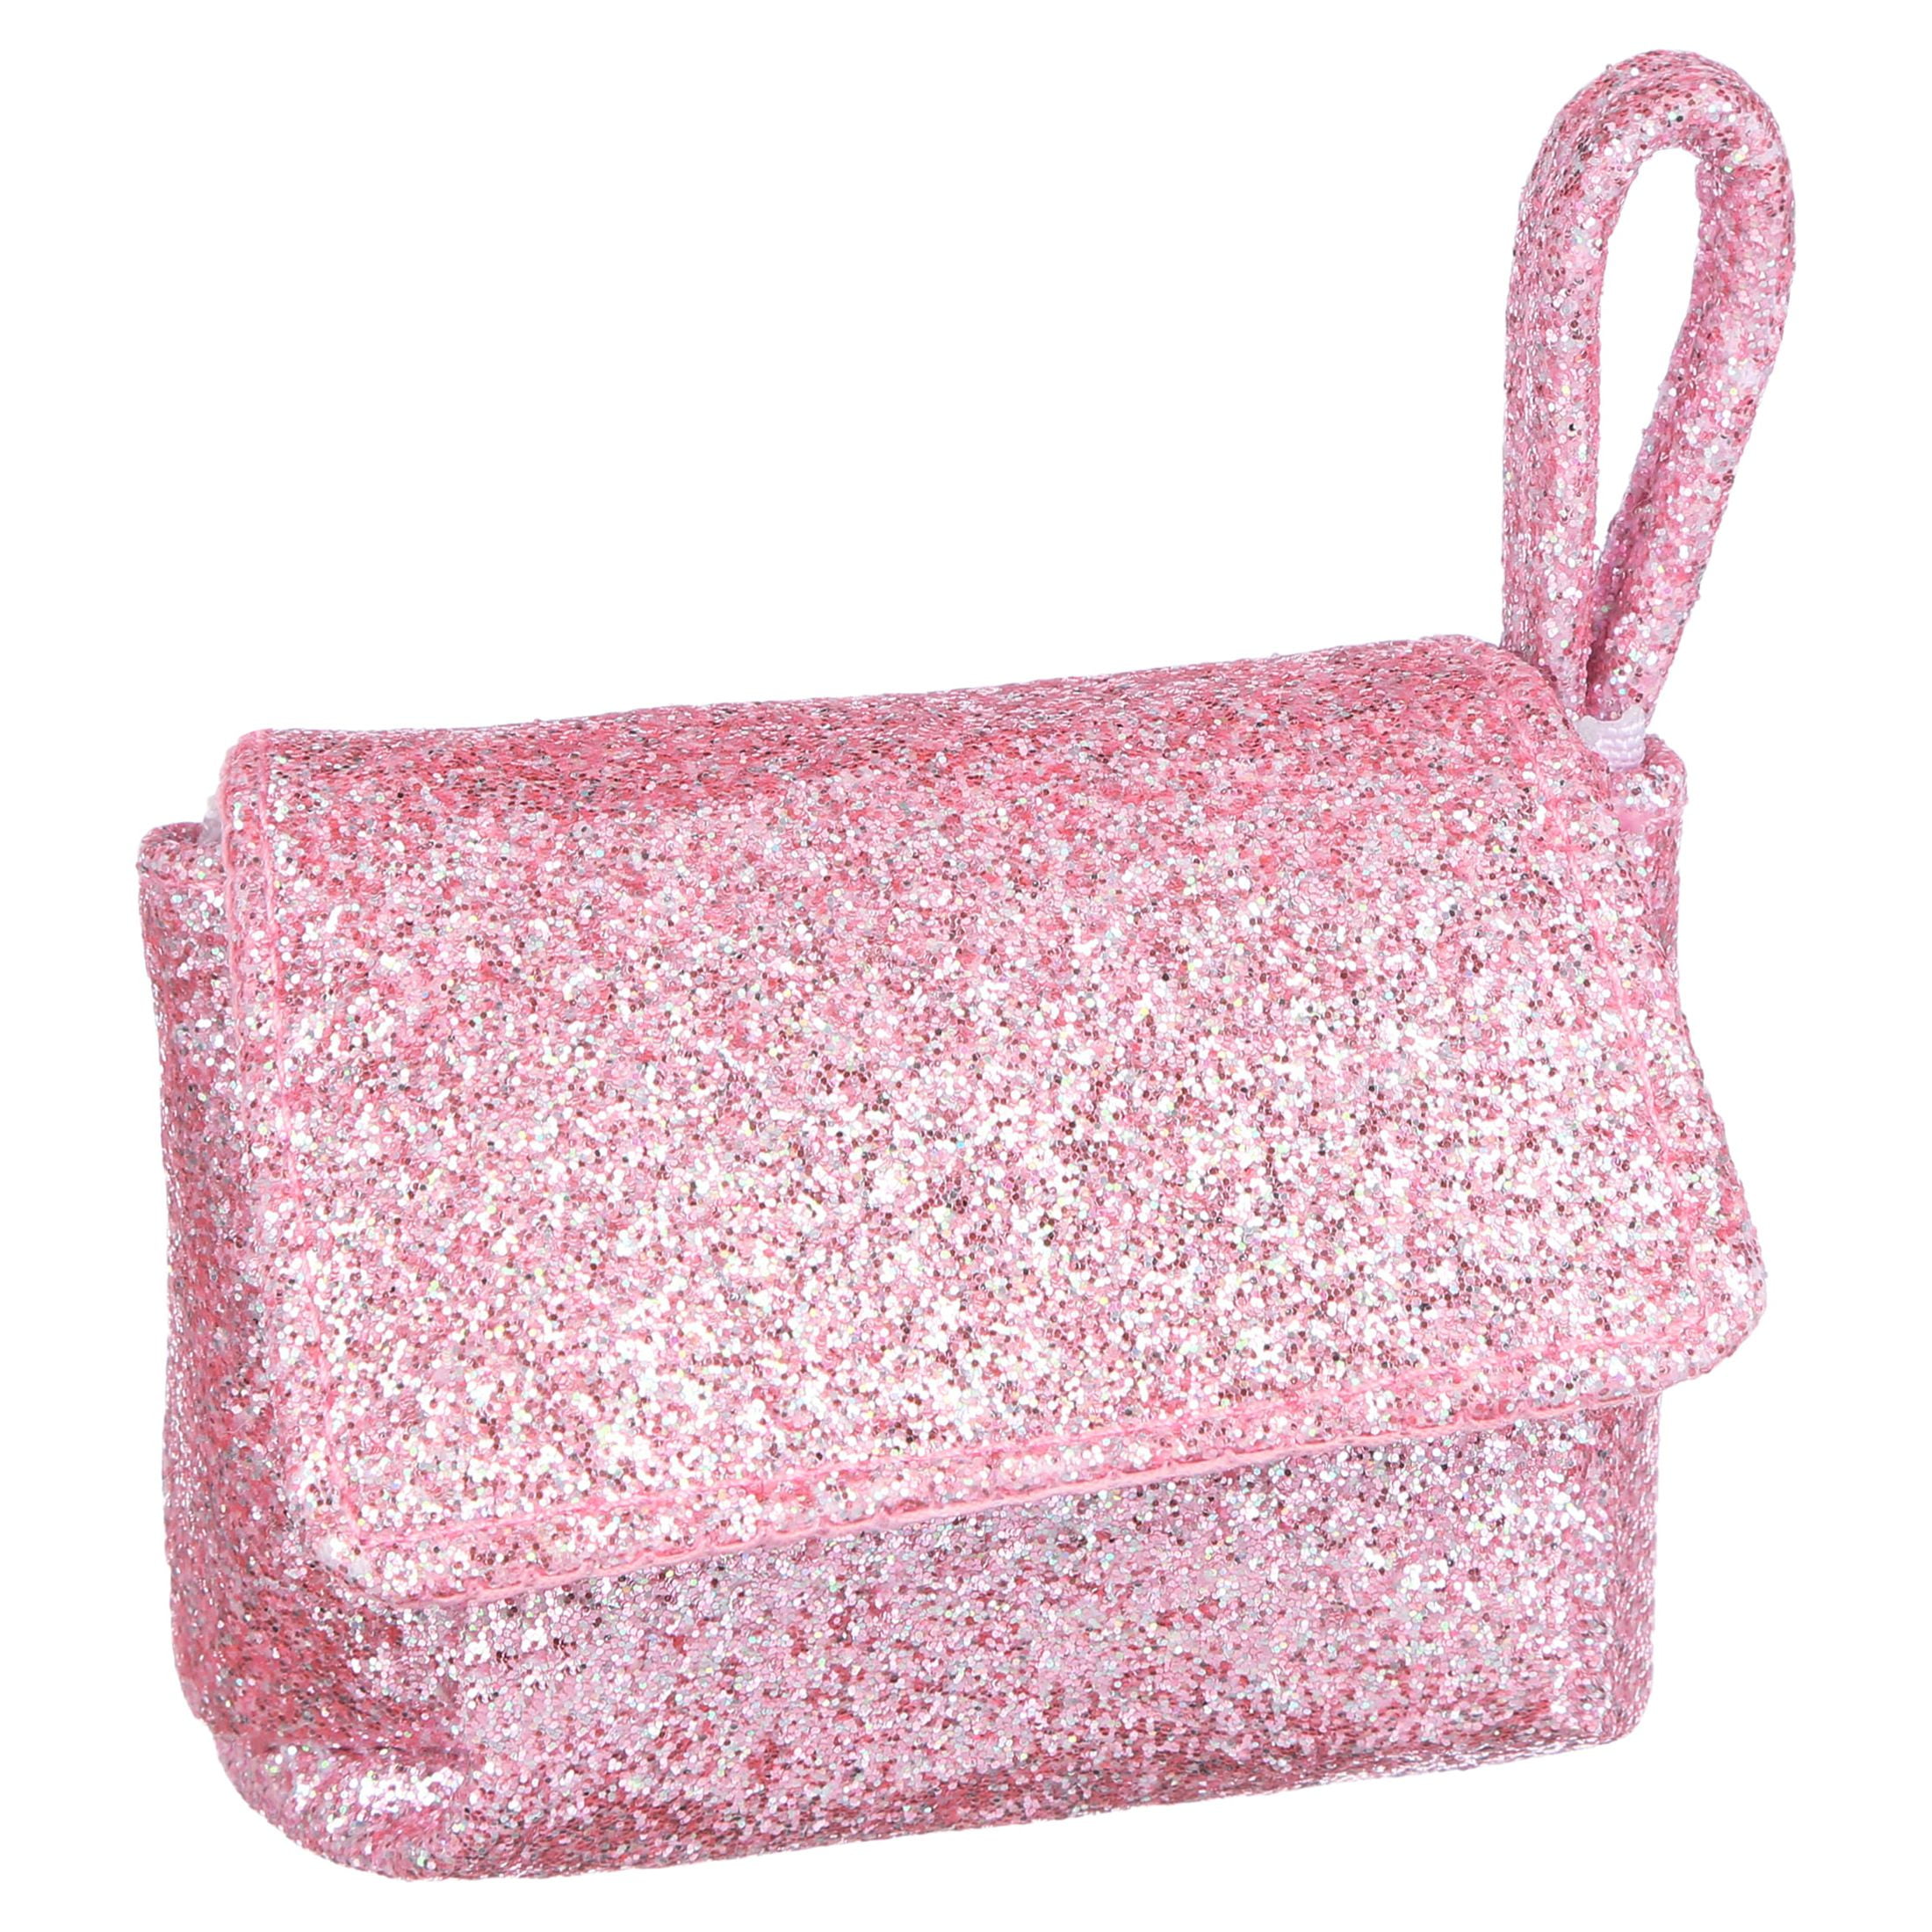  REAL LITTLES, Collectible Micro Handbag Collection, 5  Exclusive Bags